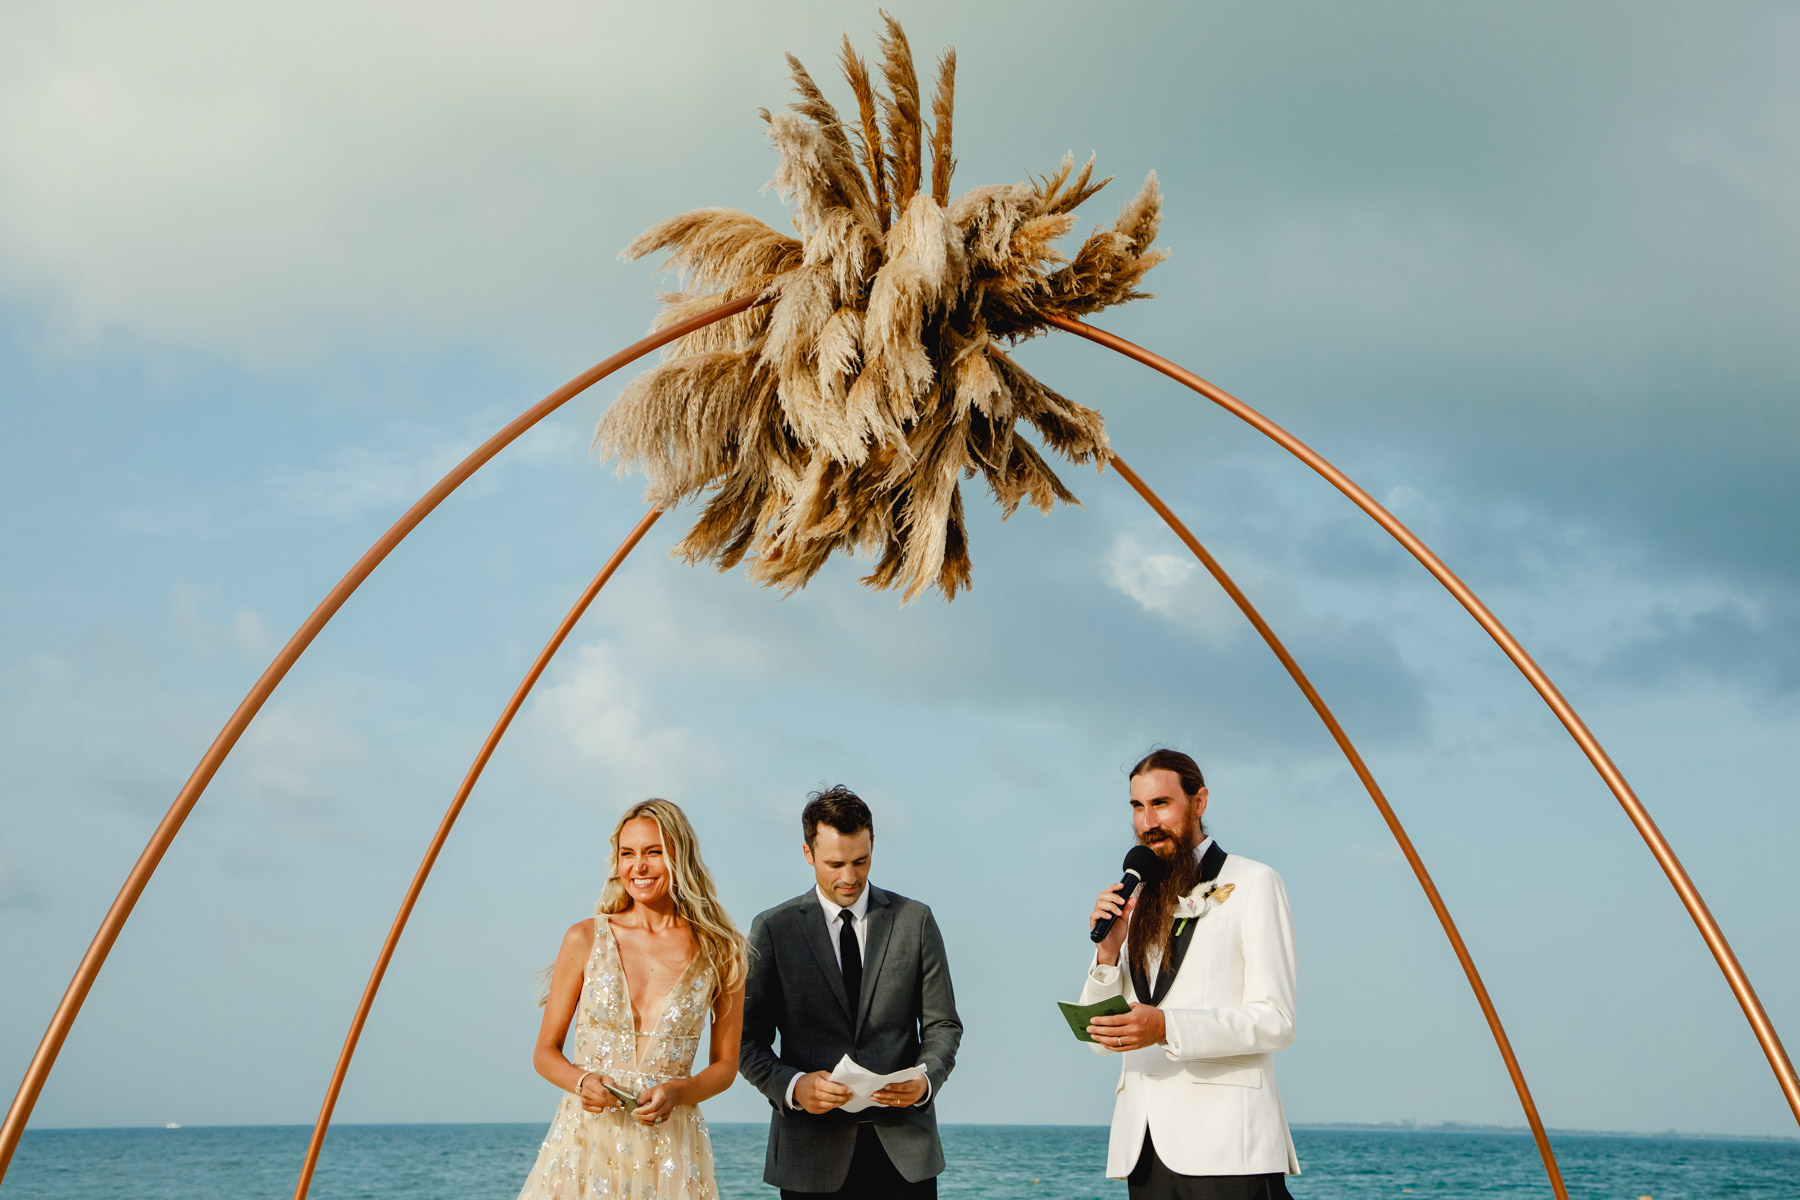 boho-inspired wedding gazebo at the beach of Finest Playa Mujeres captured by Mexico wedding photographer